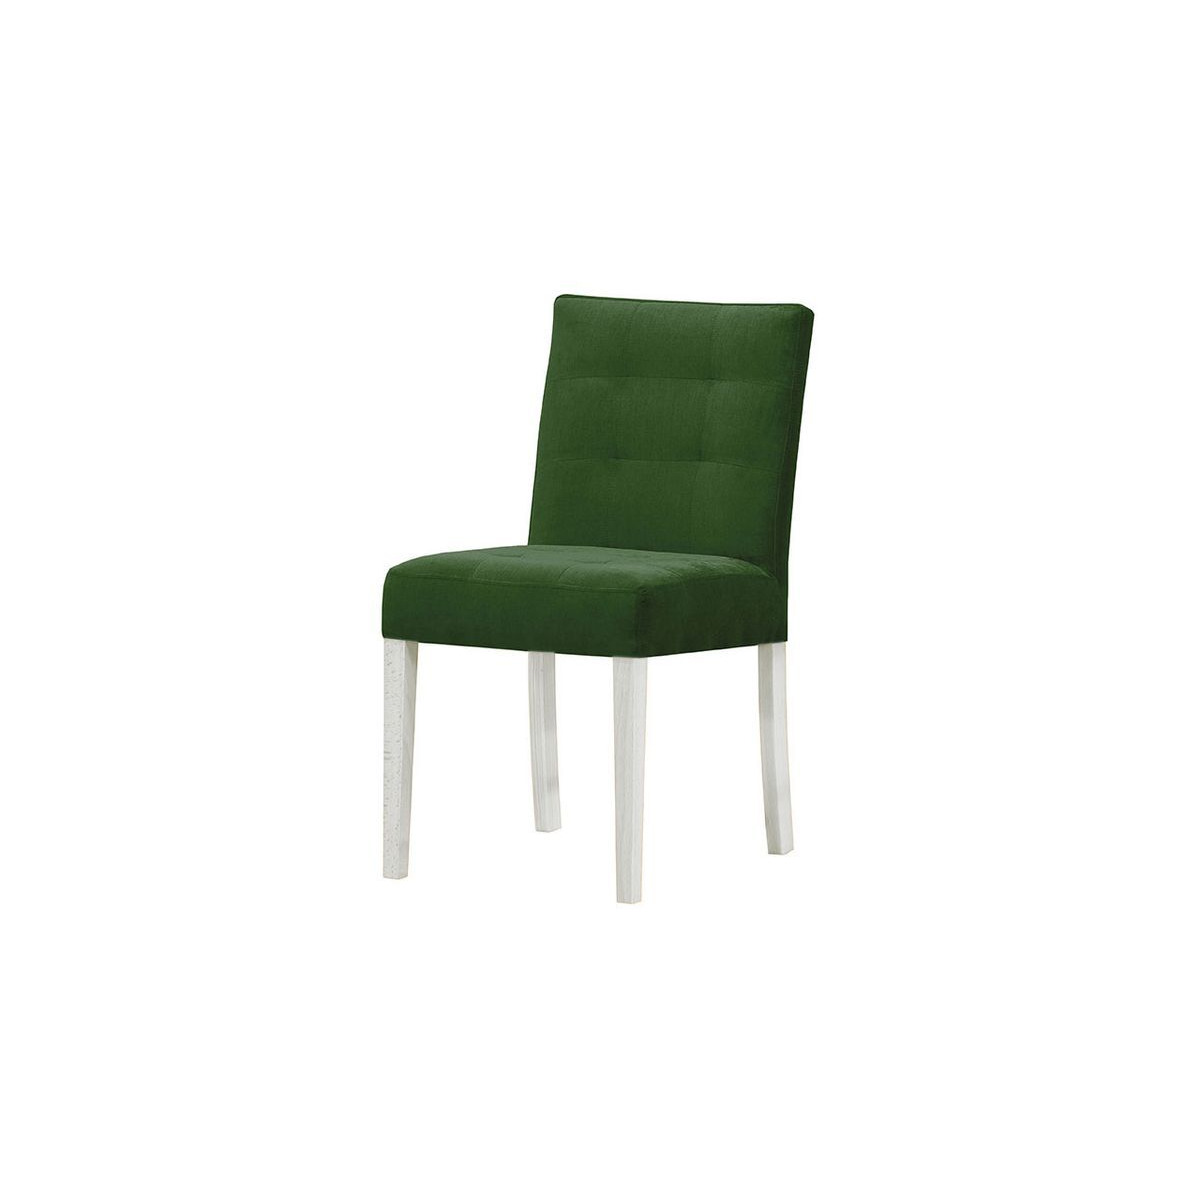 Mia Dining Chair, green, Leg colour: white - image 1